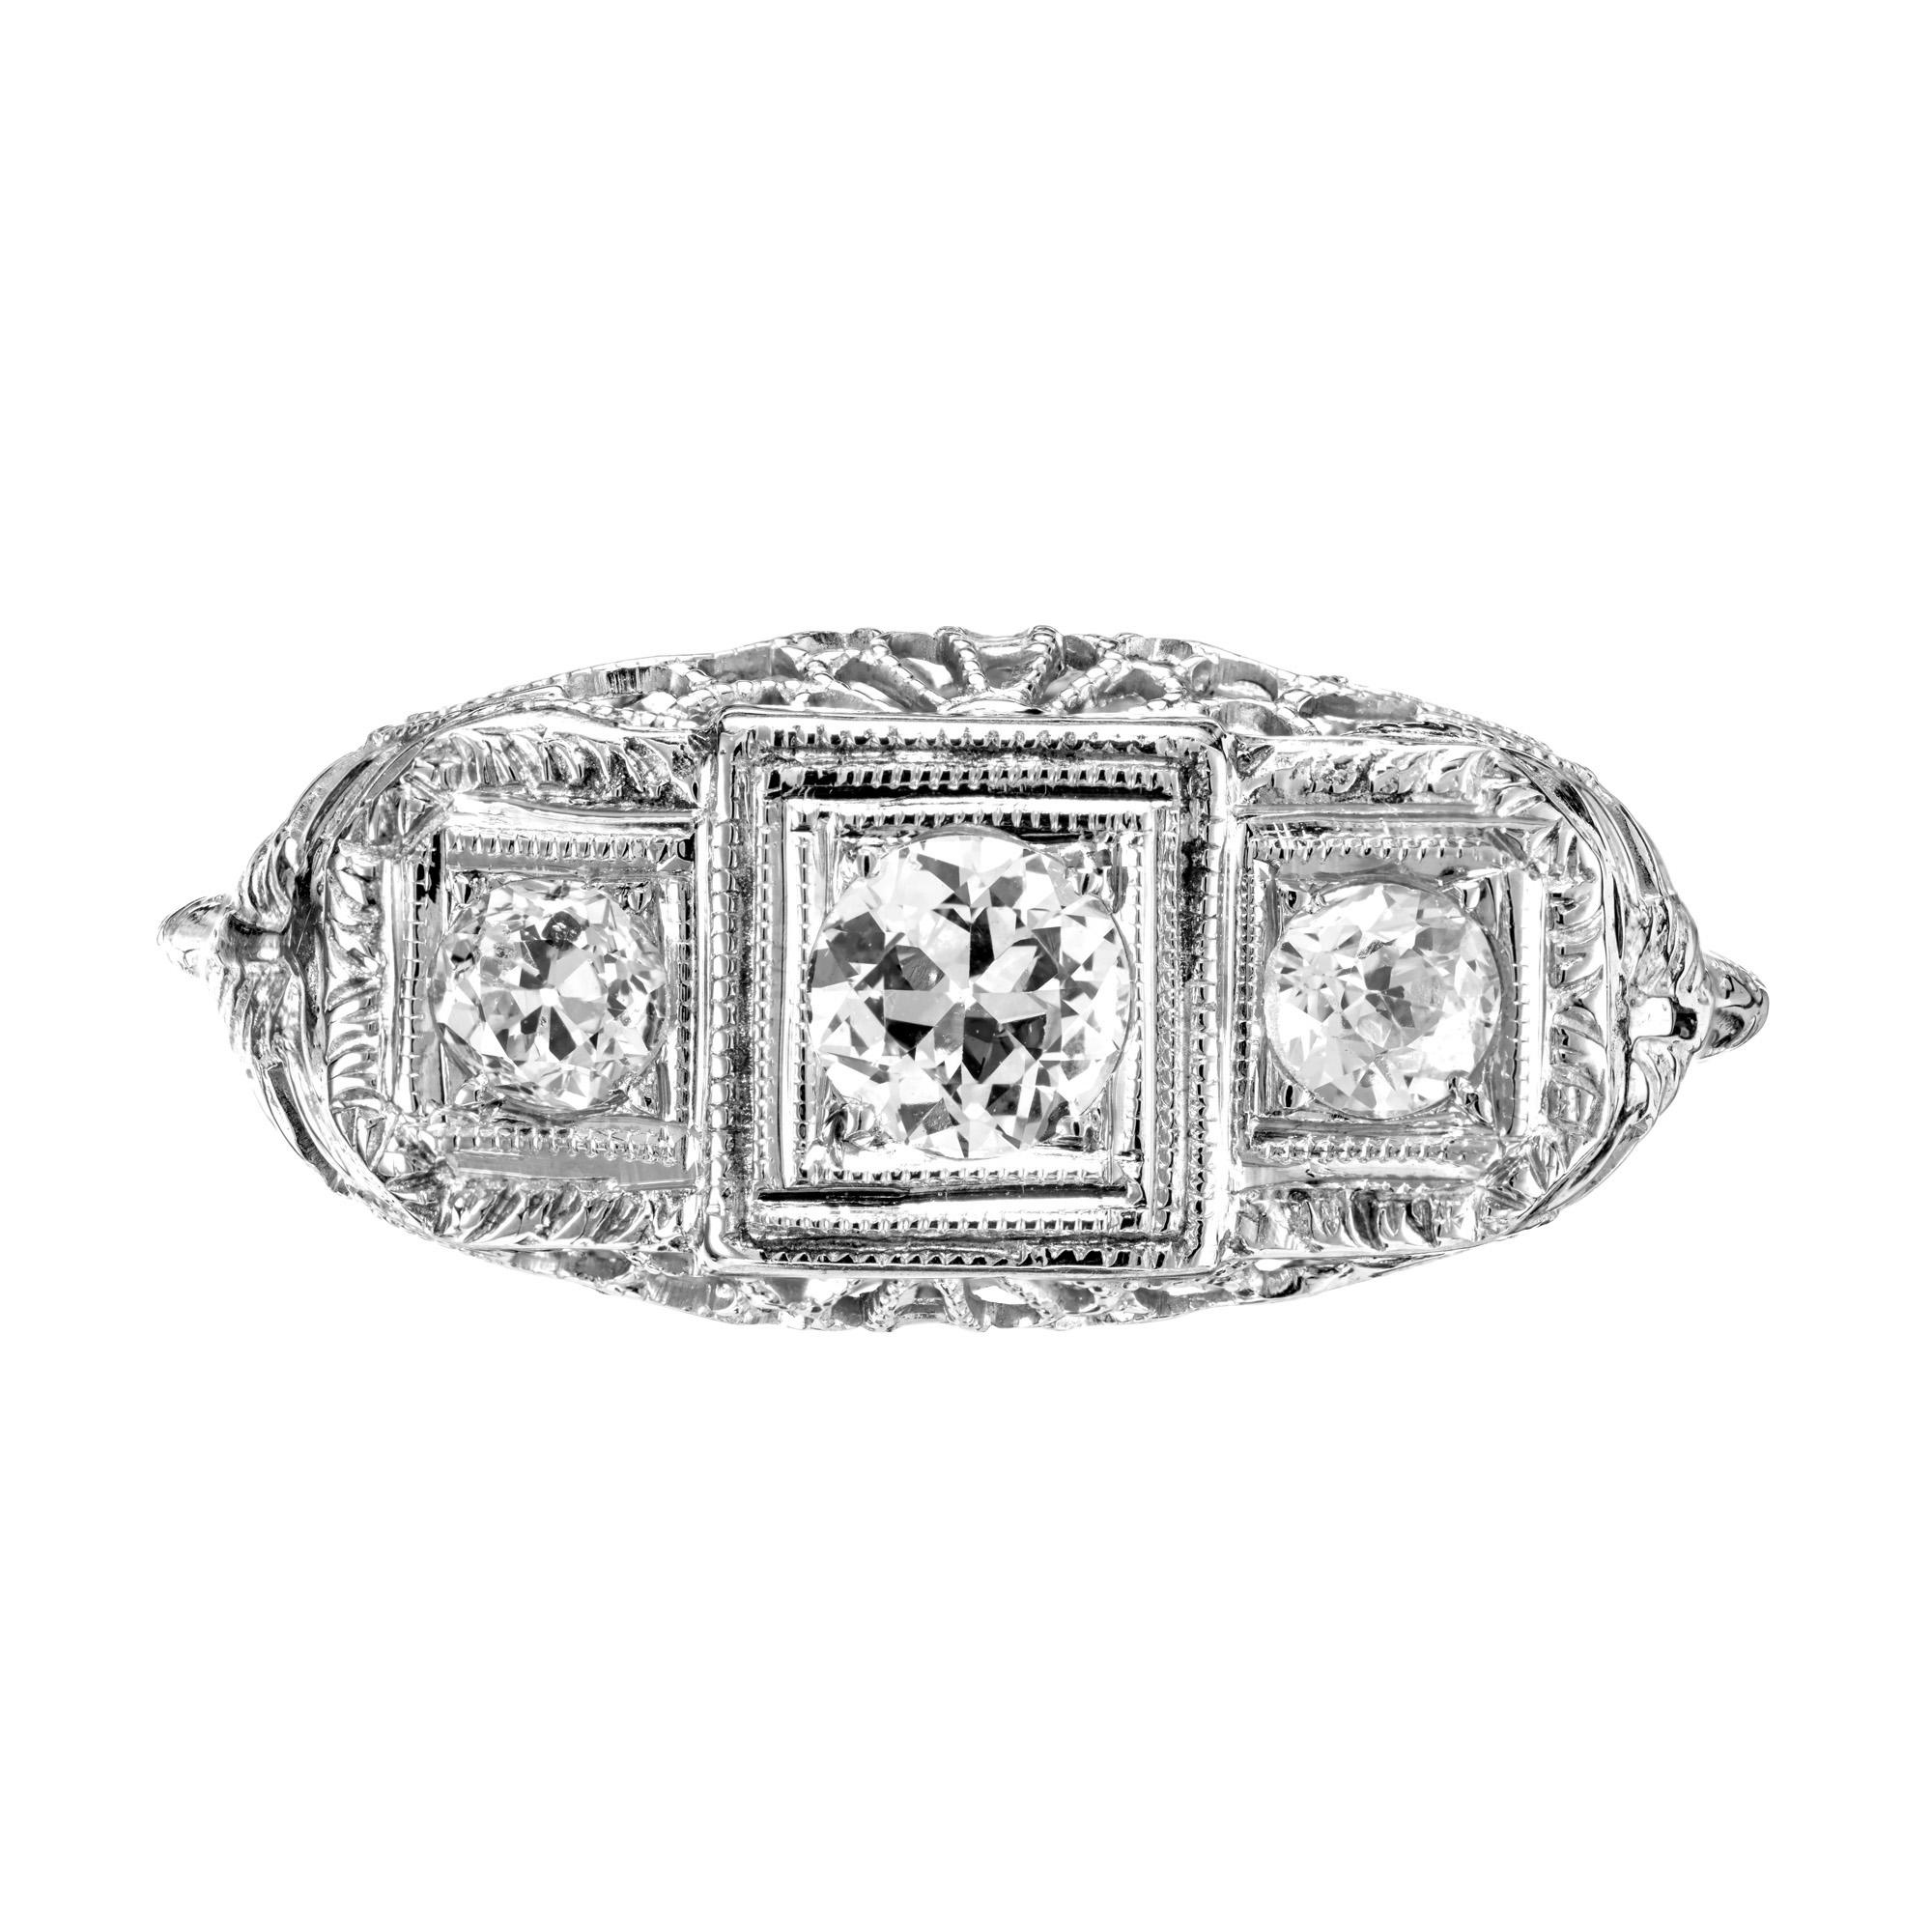 1930's raised top filigree Art Deco diamond engagement ring. 3 European transitional cut diamonds set in an 18k white gold filigree setting. 

3 European transitional cut diamonds, approx. total weight .48cts, G, VS
Size 6.25 and sizable
18k white